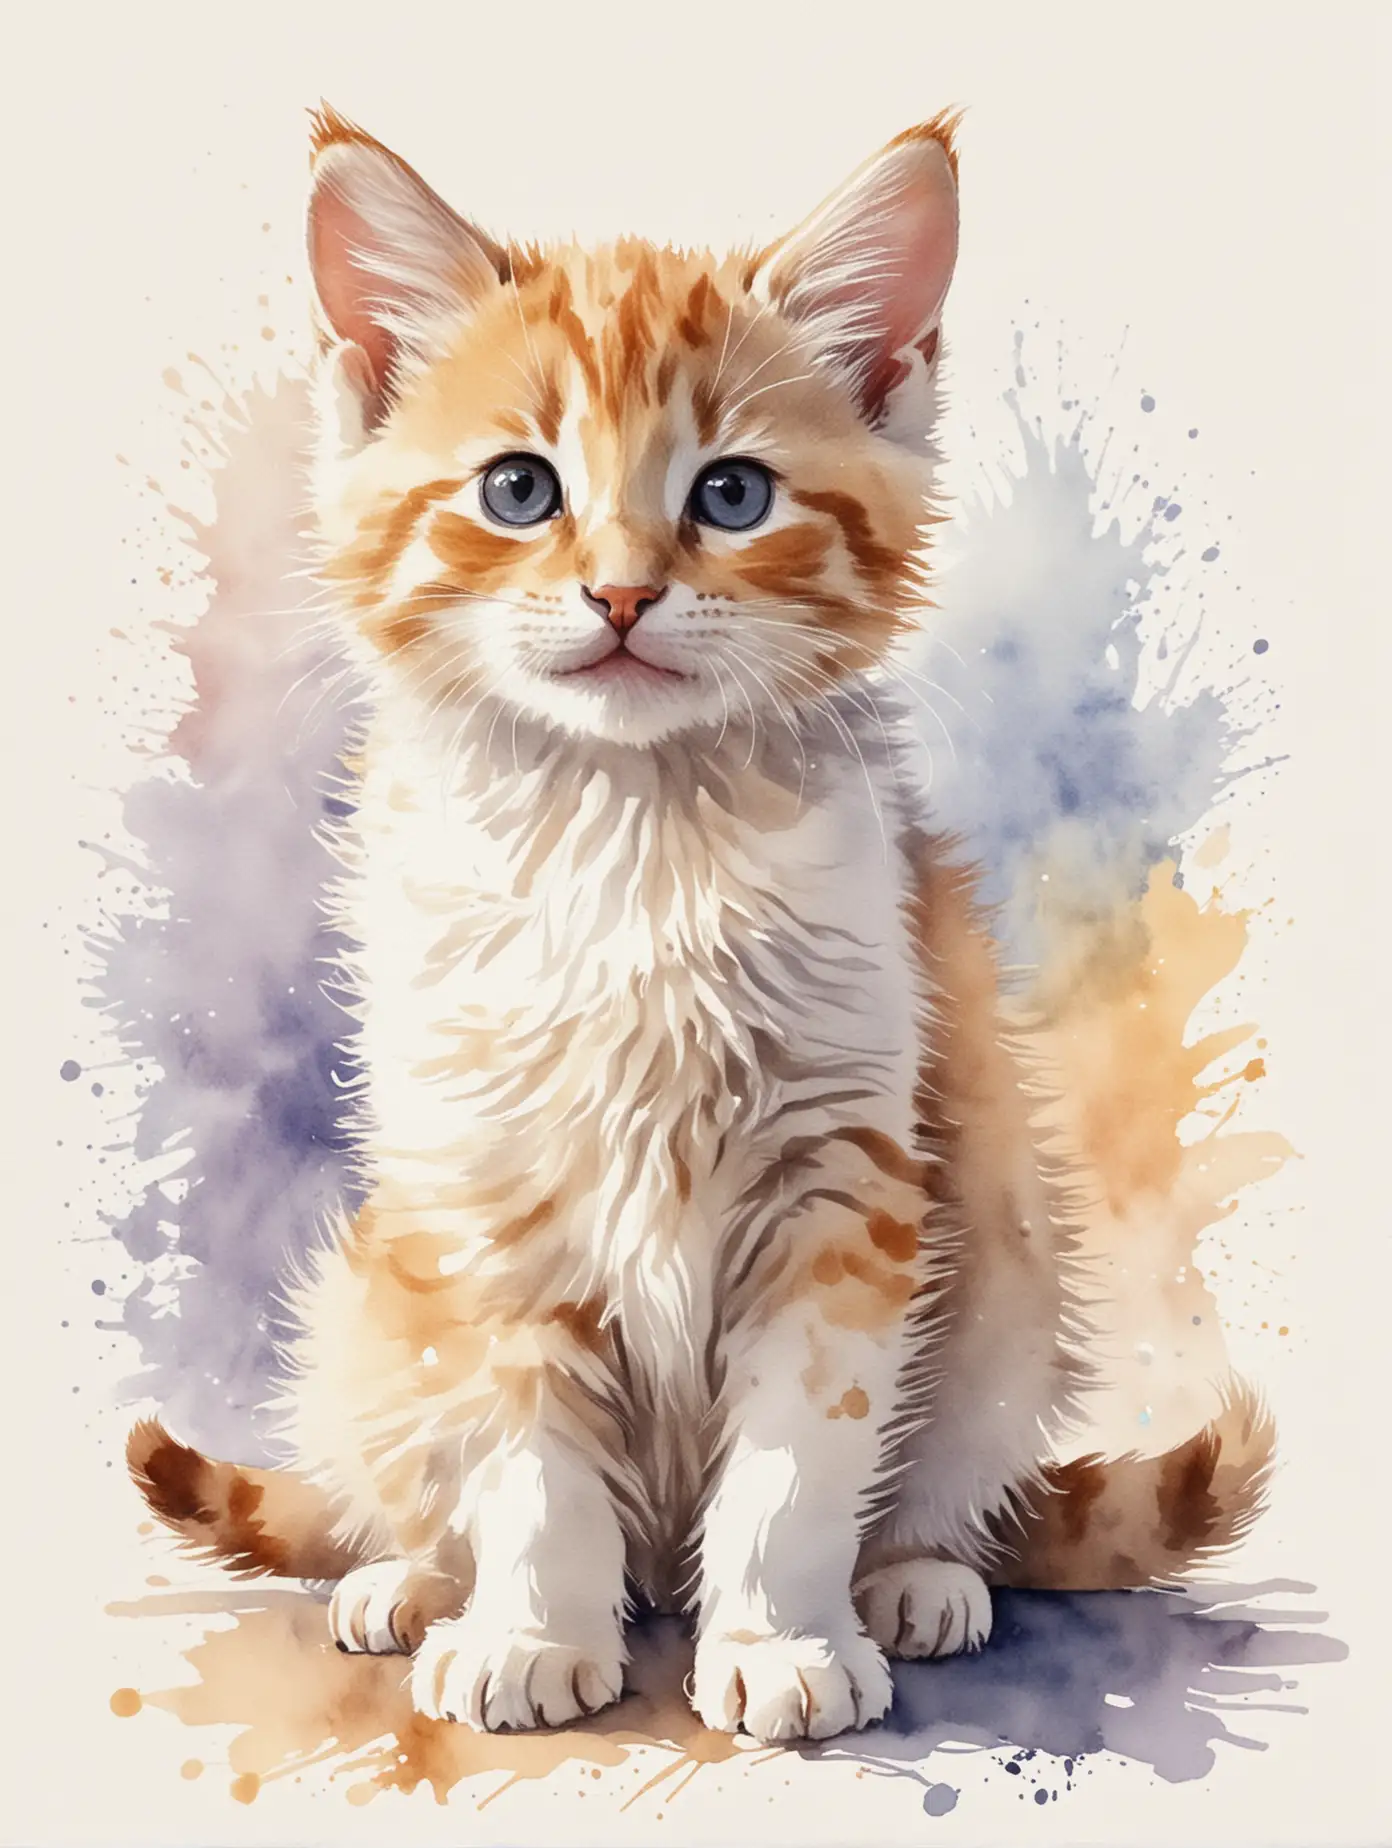 a happy kitten, sitting, watercolour style